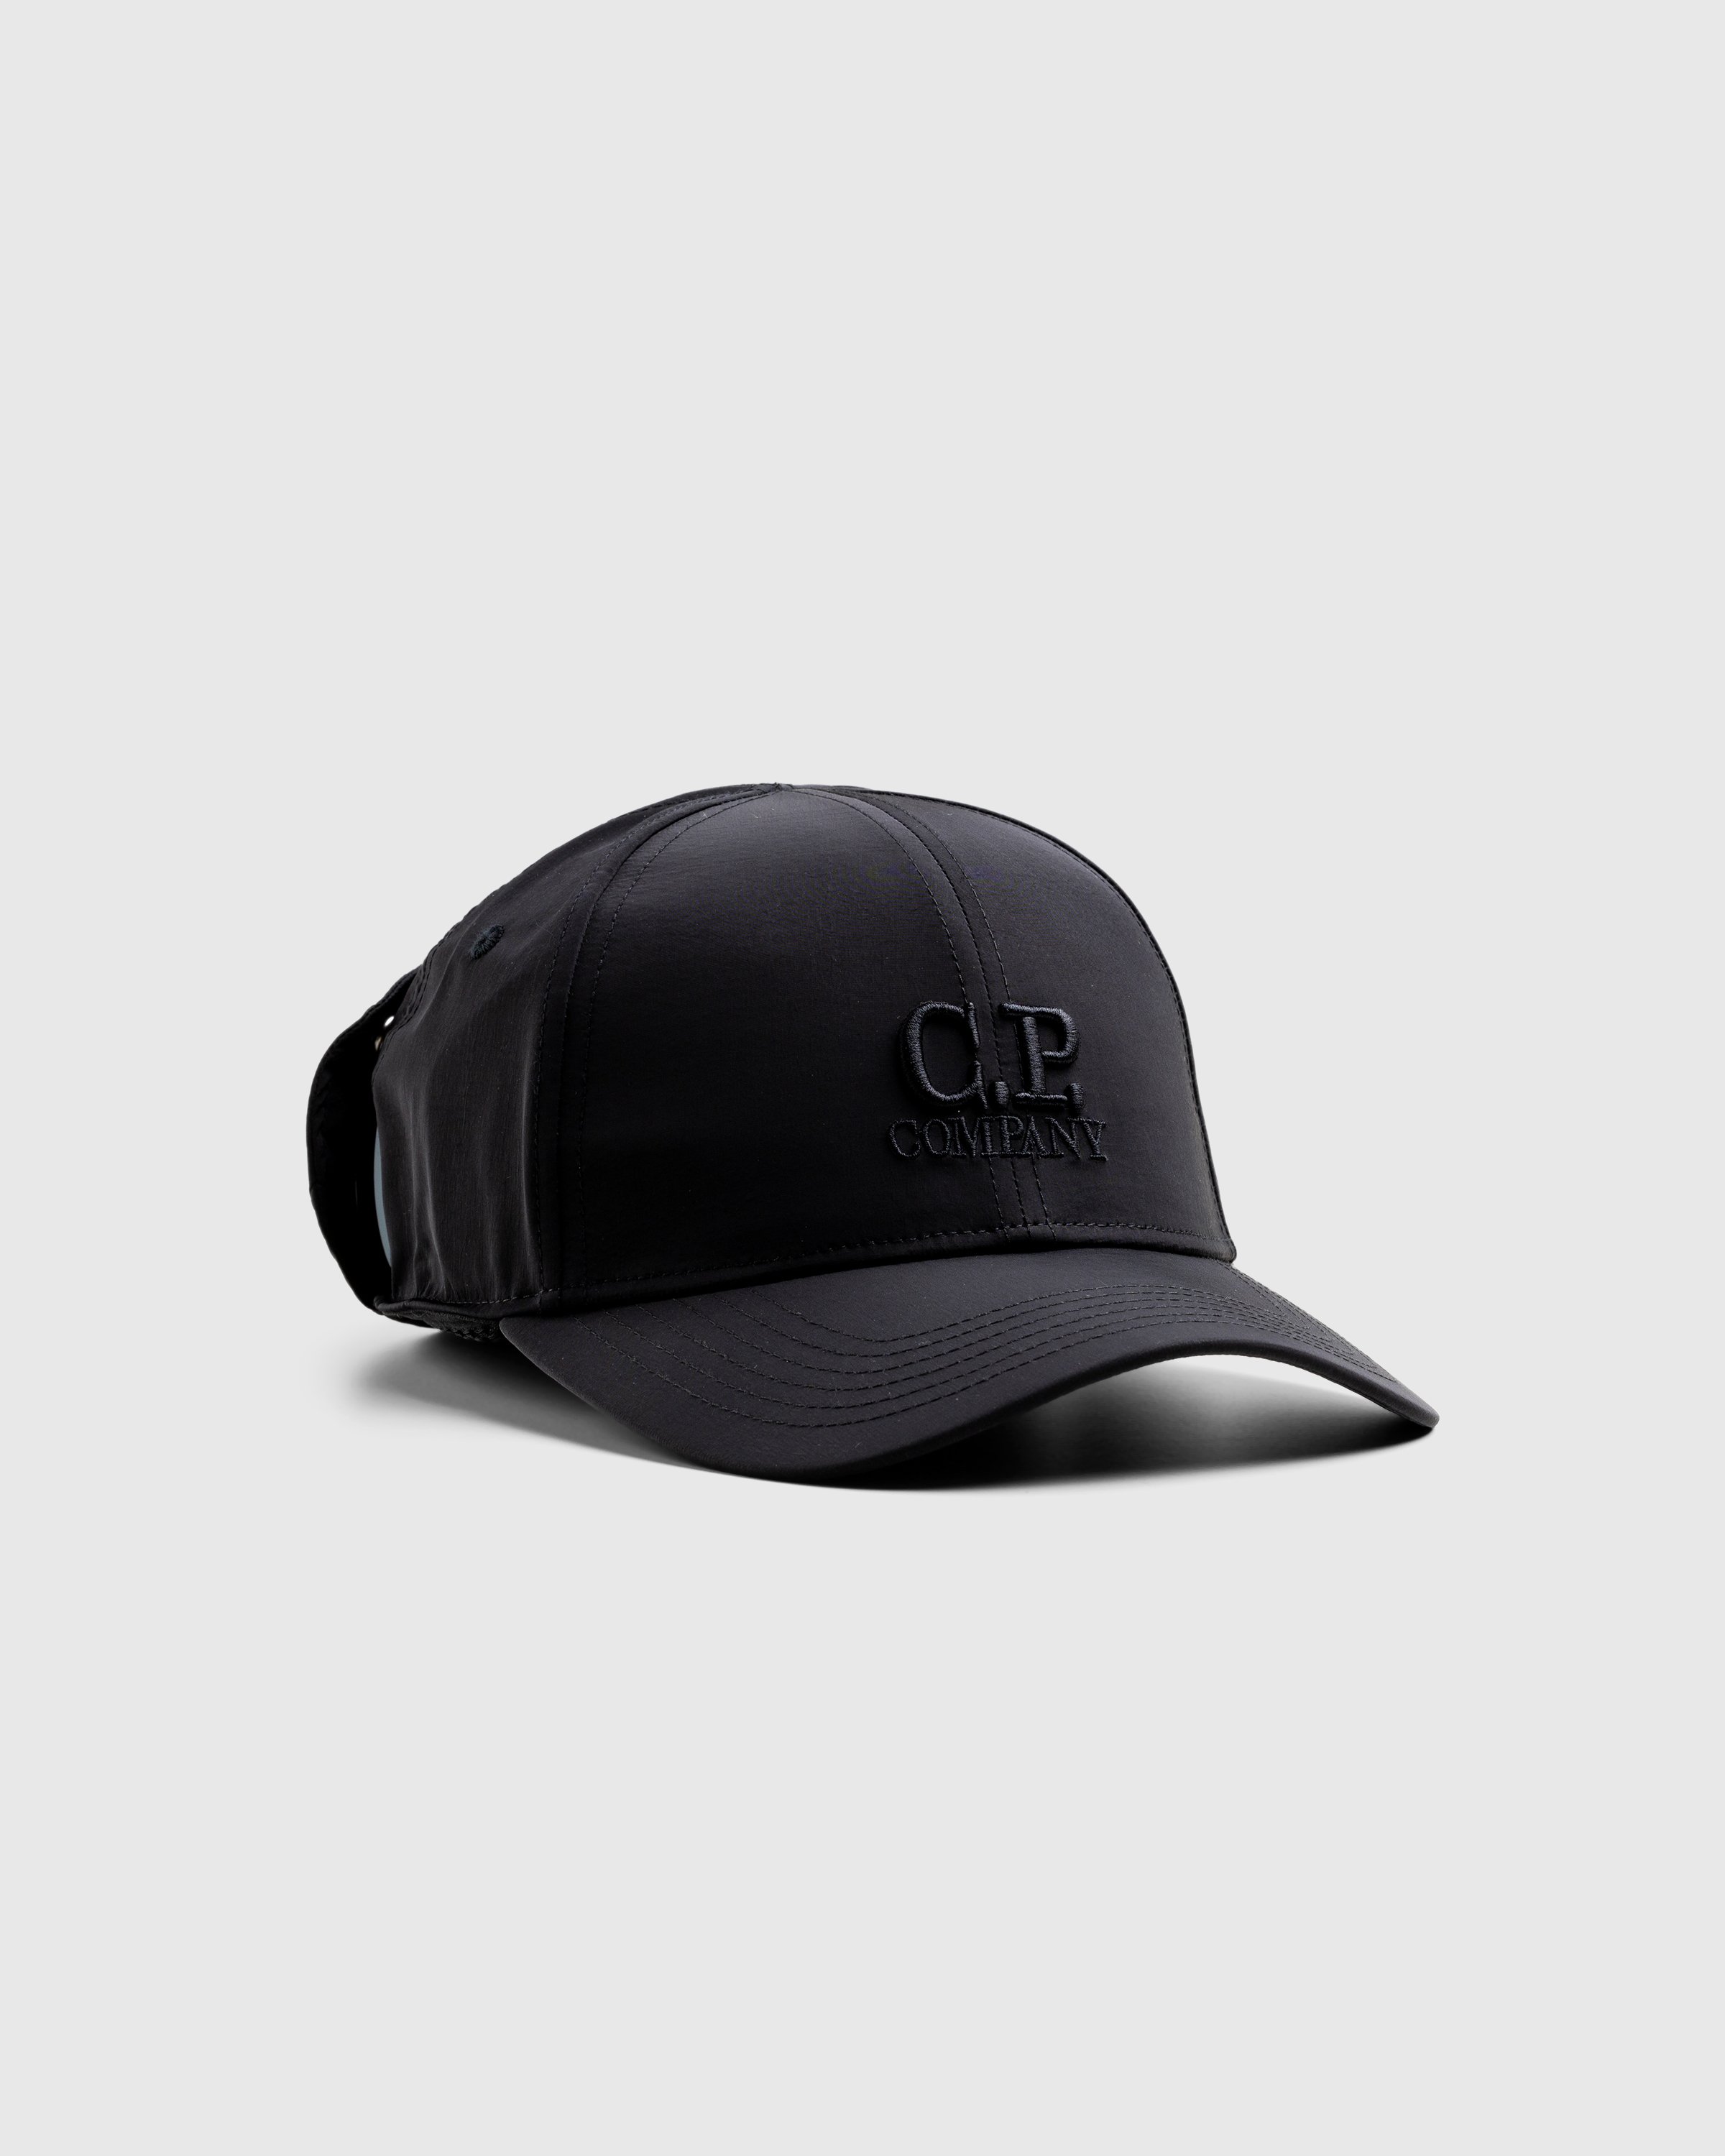 C.P. Company - ACCESSORIES - BASEBALL CAP BLACK - Accessories - Black - Image 1